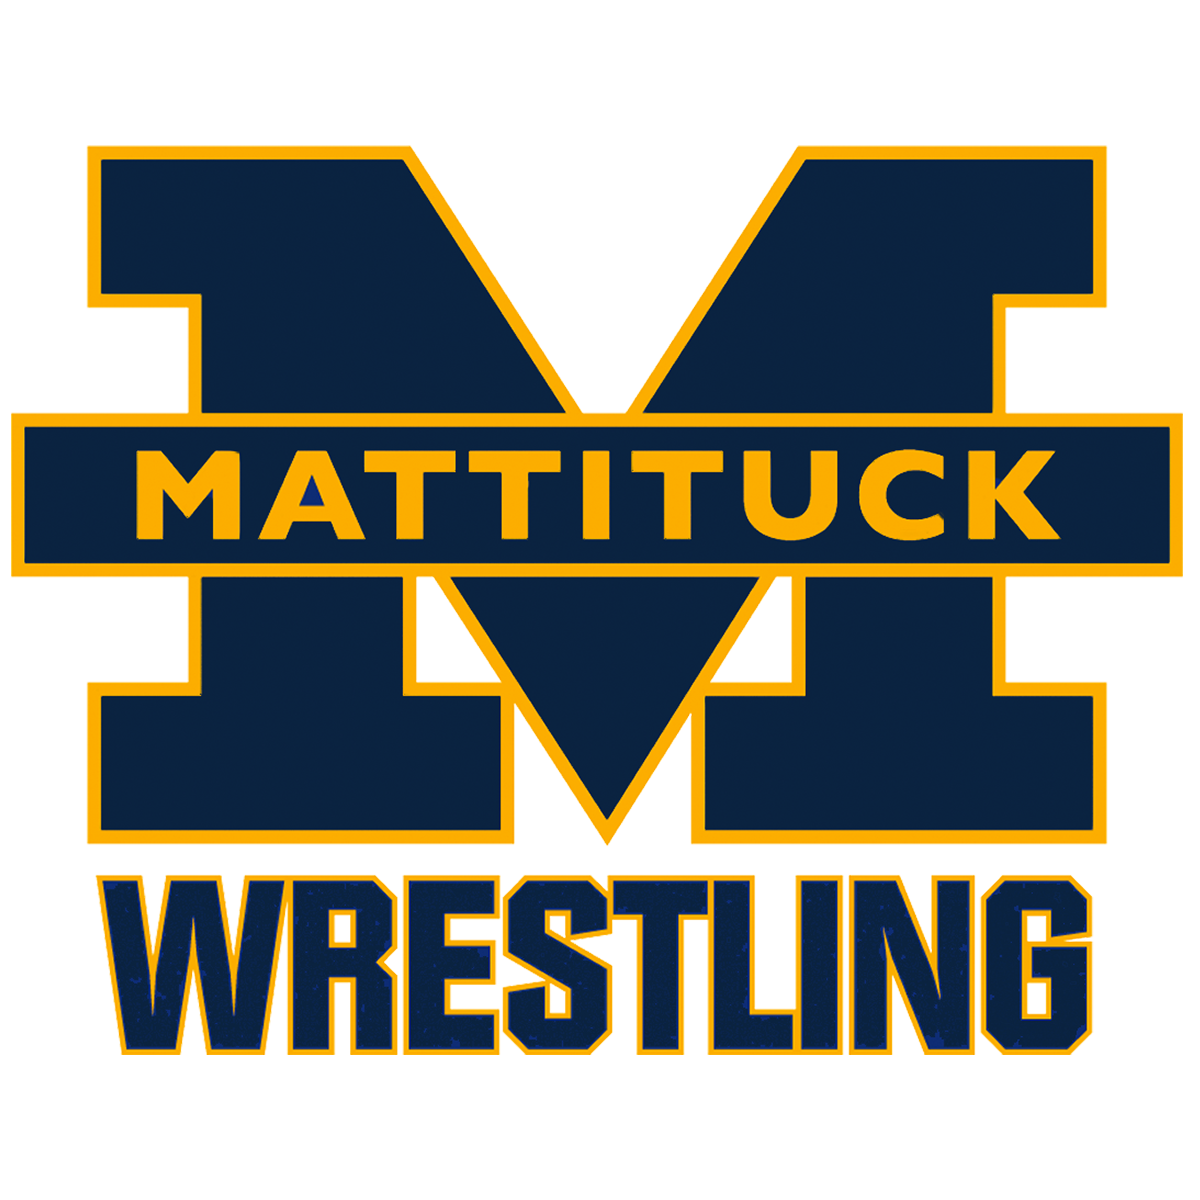 Mattituck Wrestling Team Store